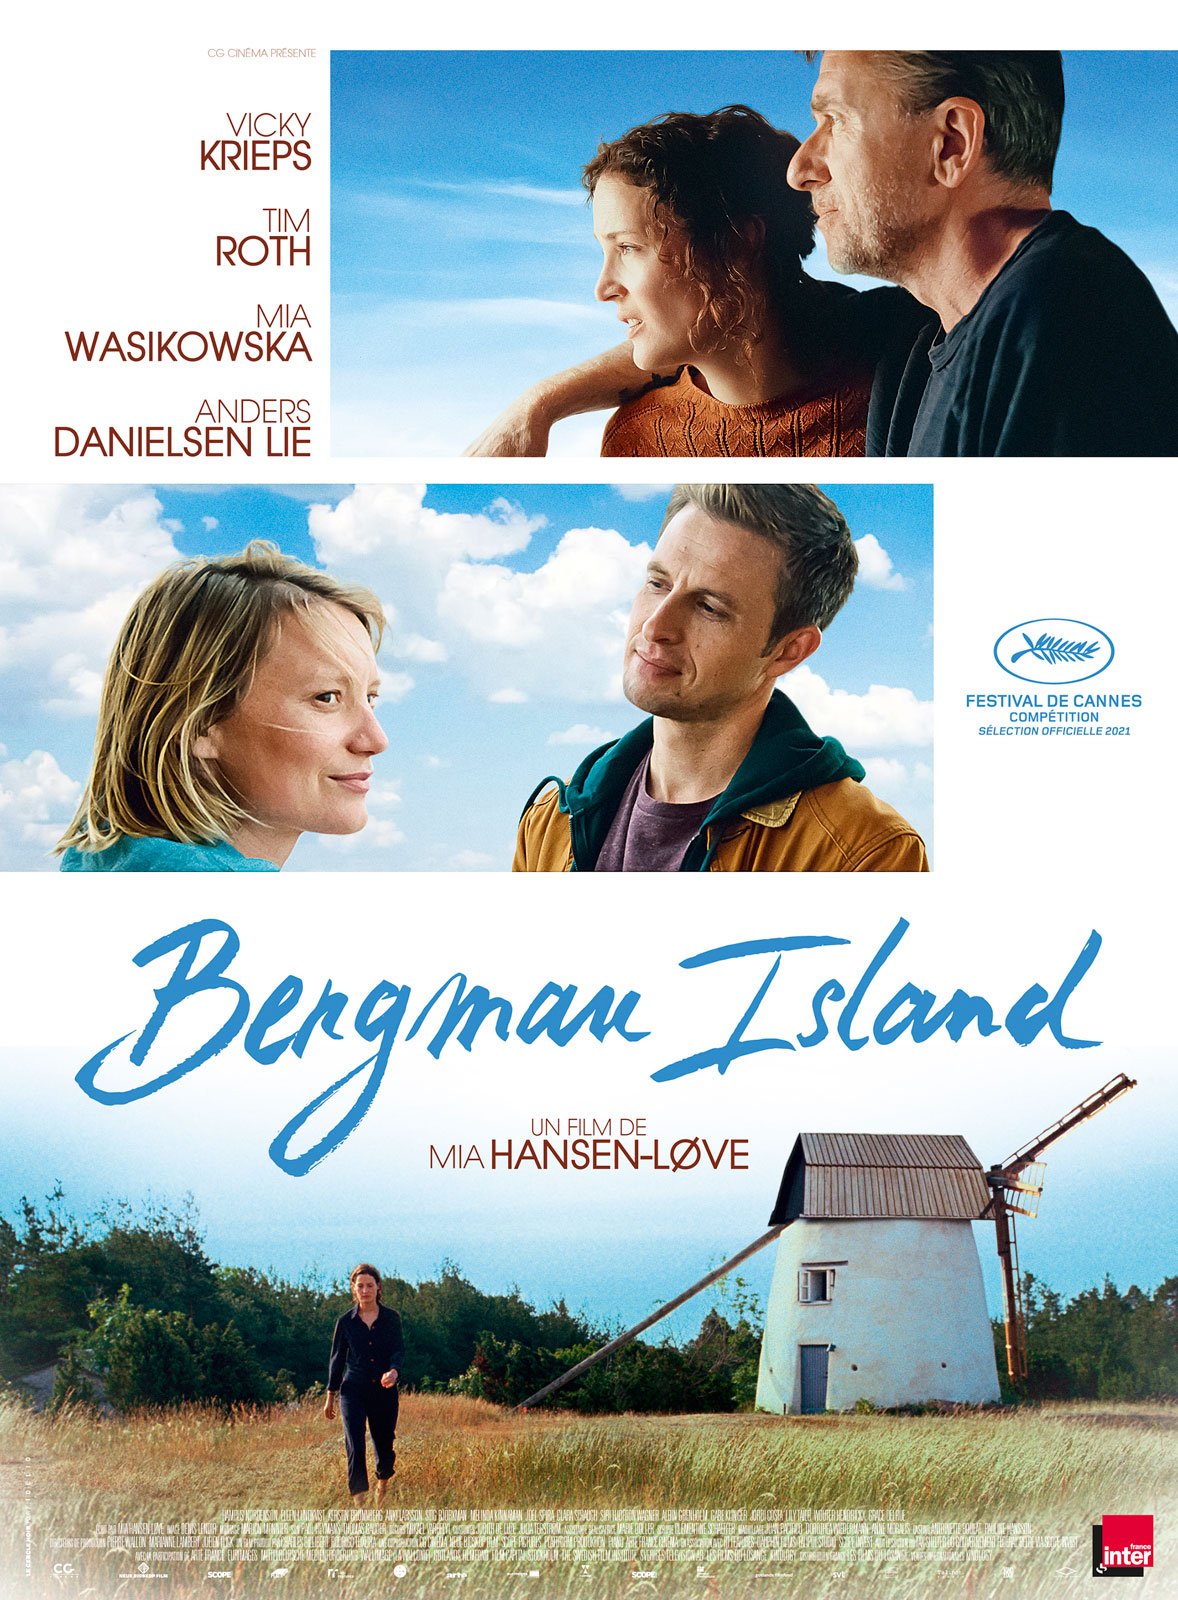 The Island - Veja onde assistir filme completo